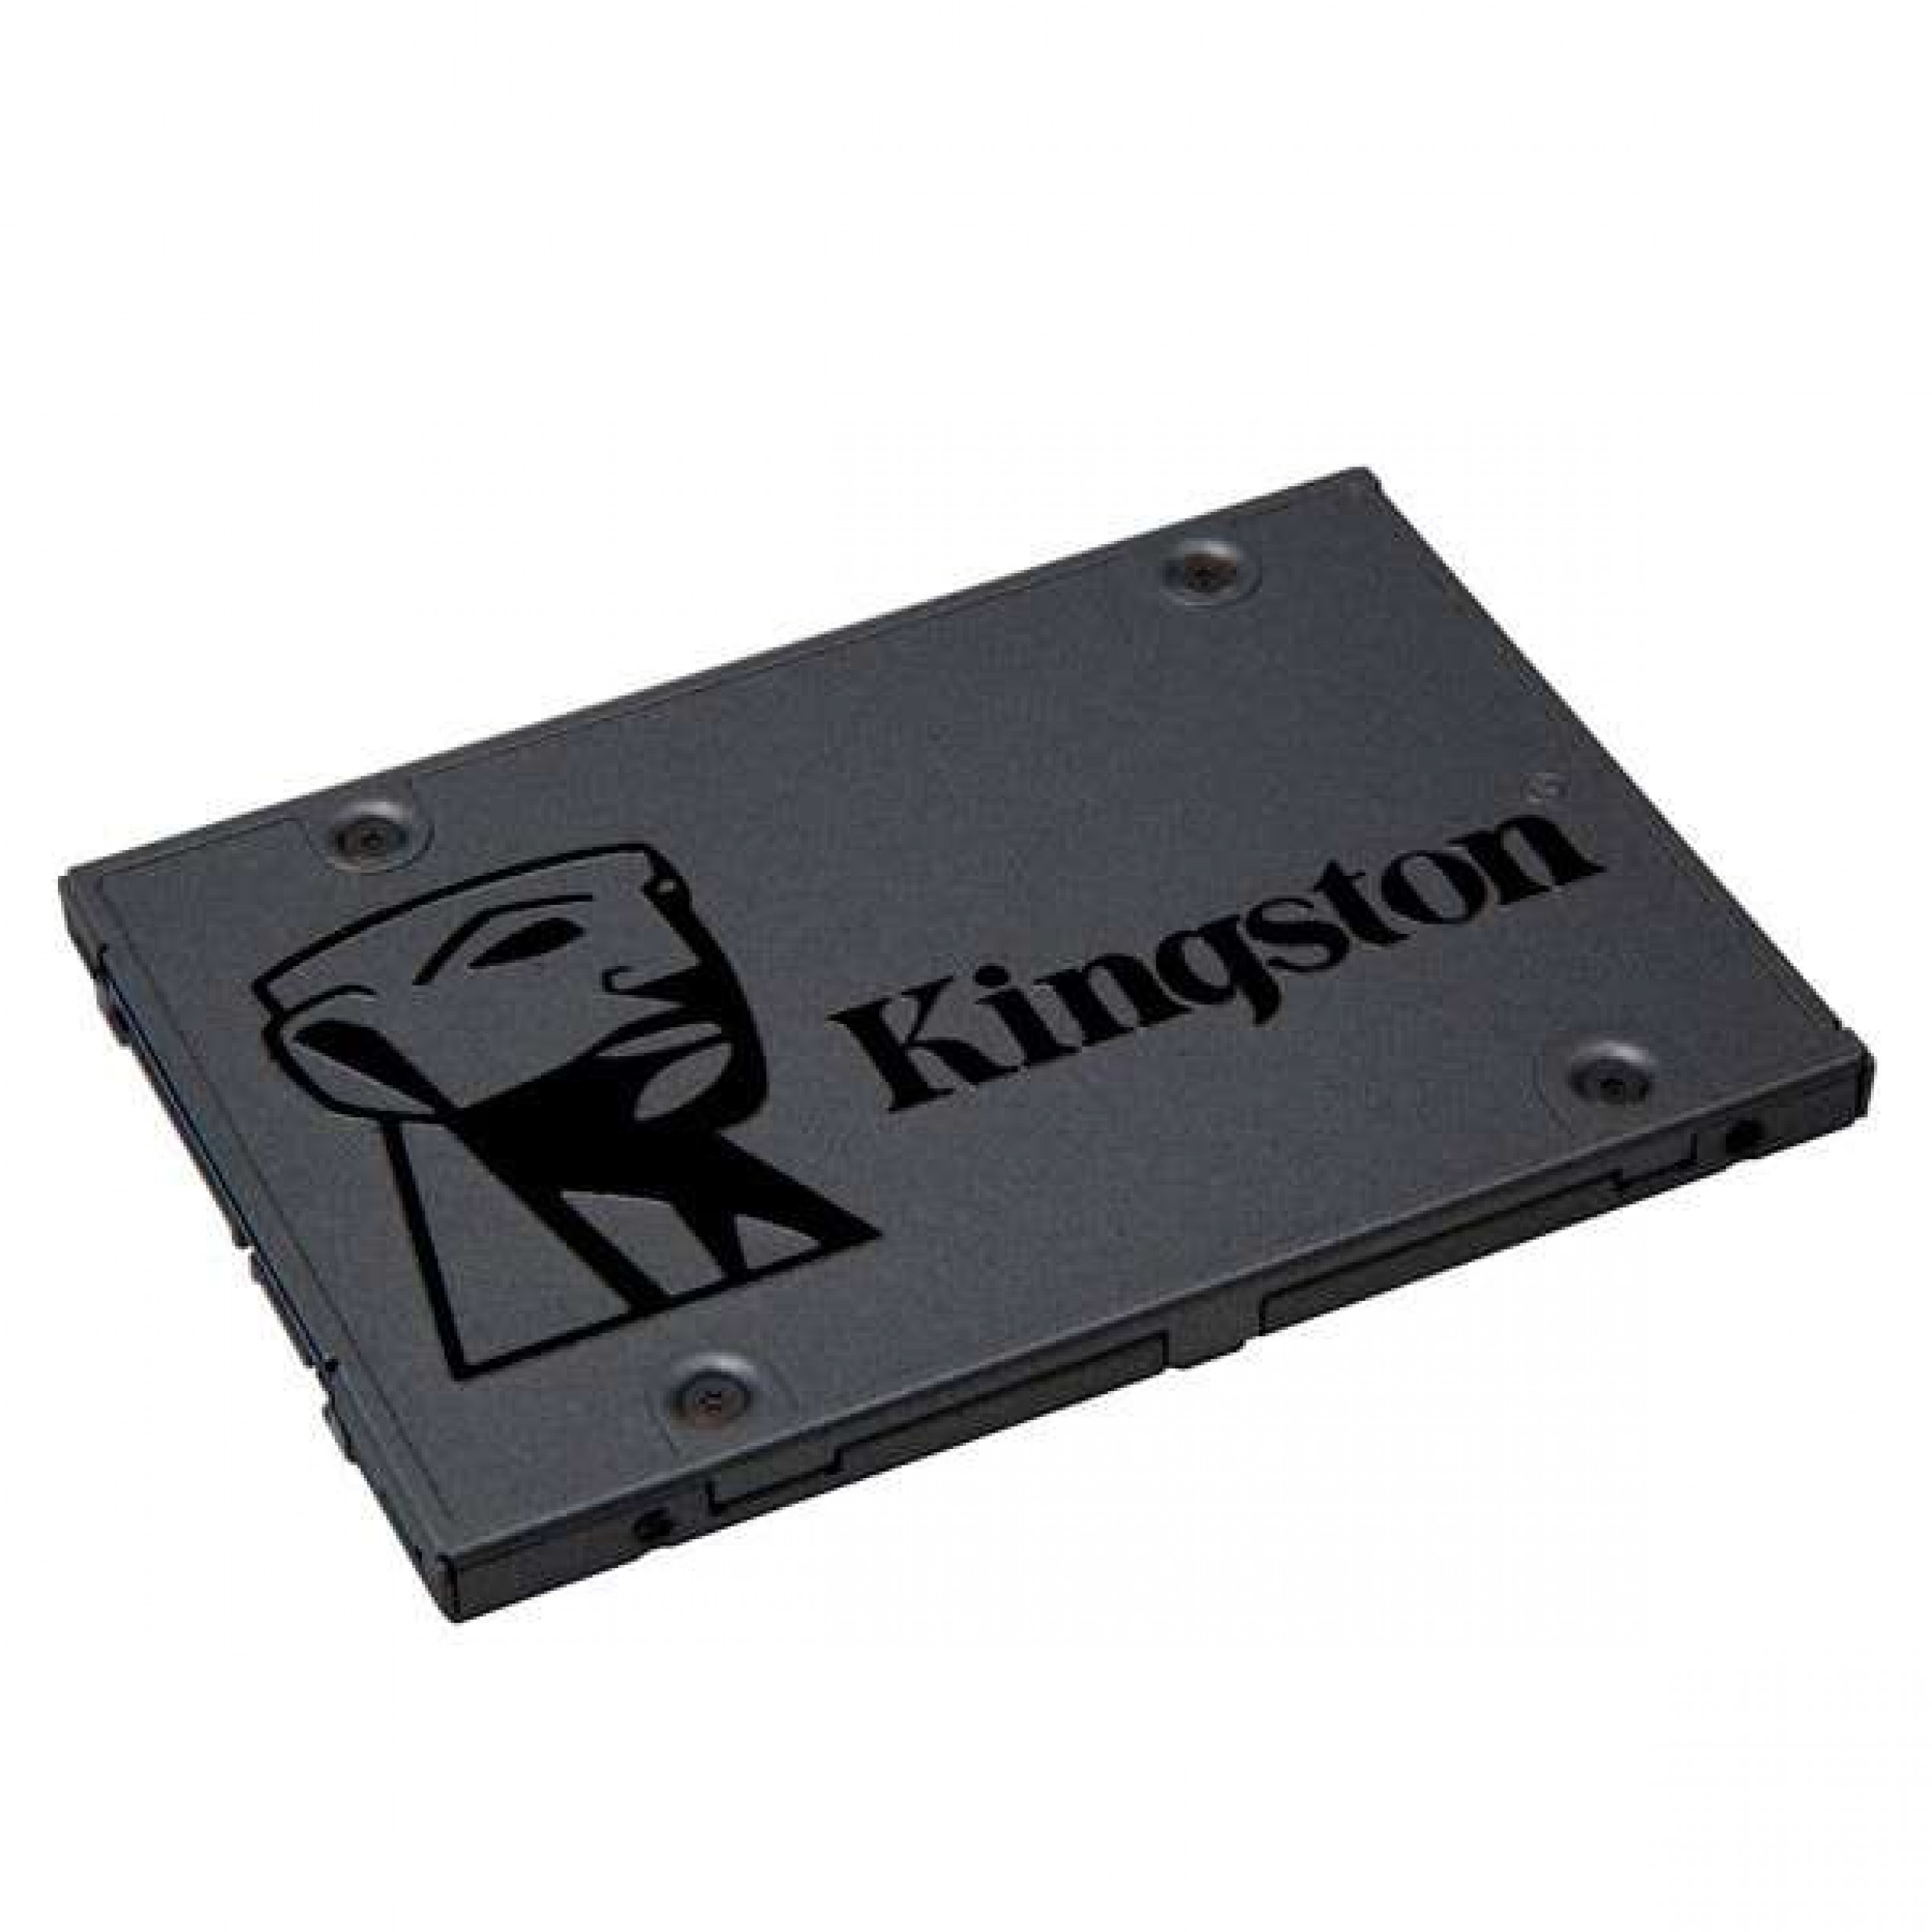 KINGSTON 480 GB A400 SSDNow SA400S37/480G 2.5" SATA 3.0 SSD